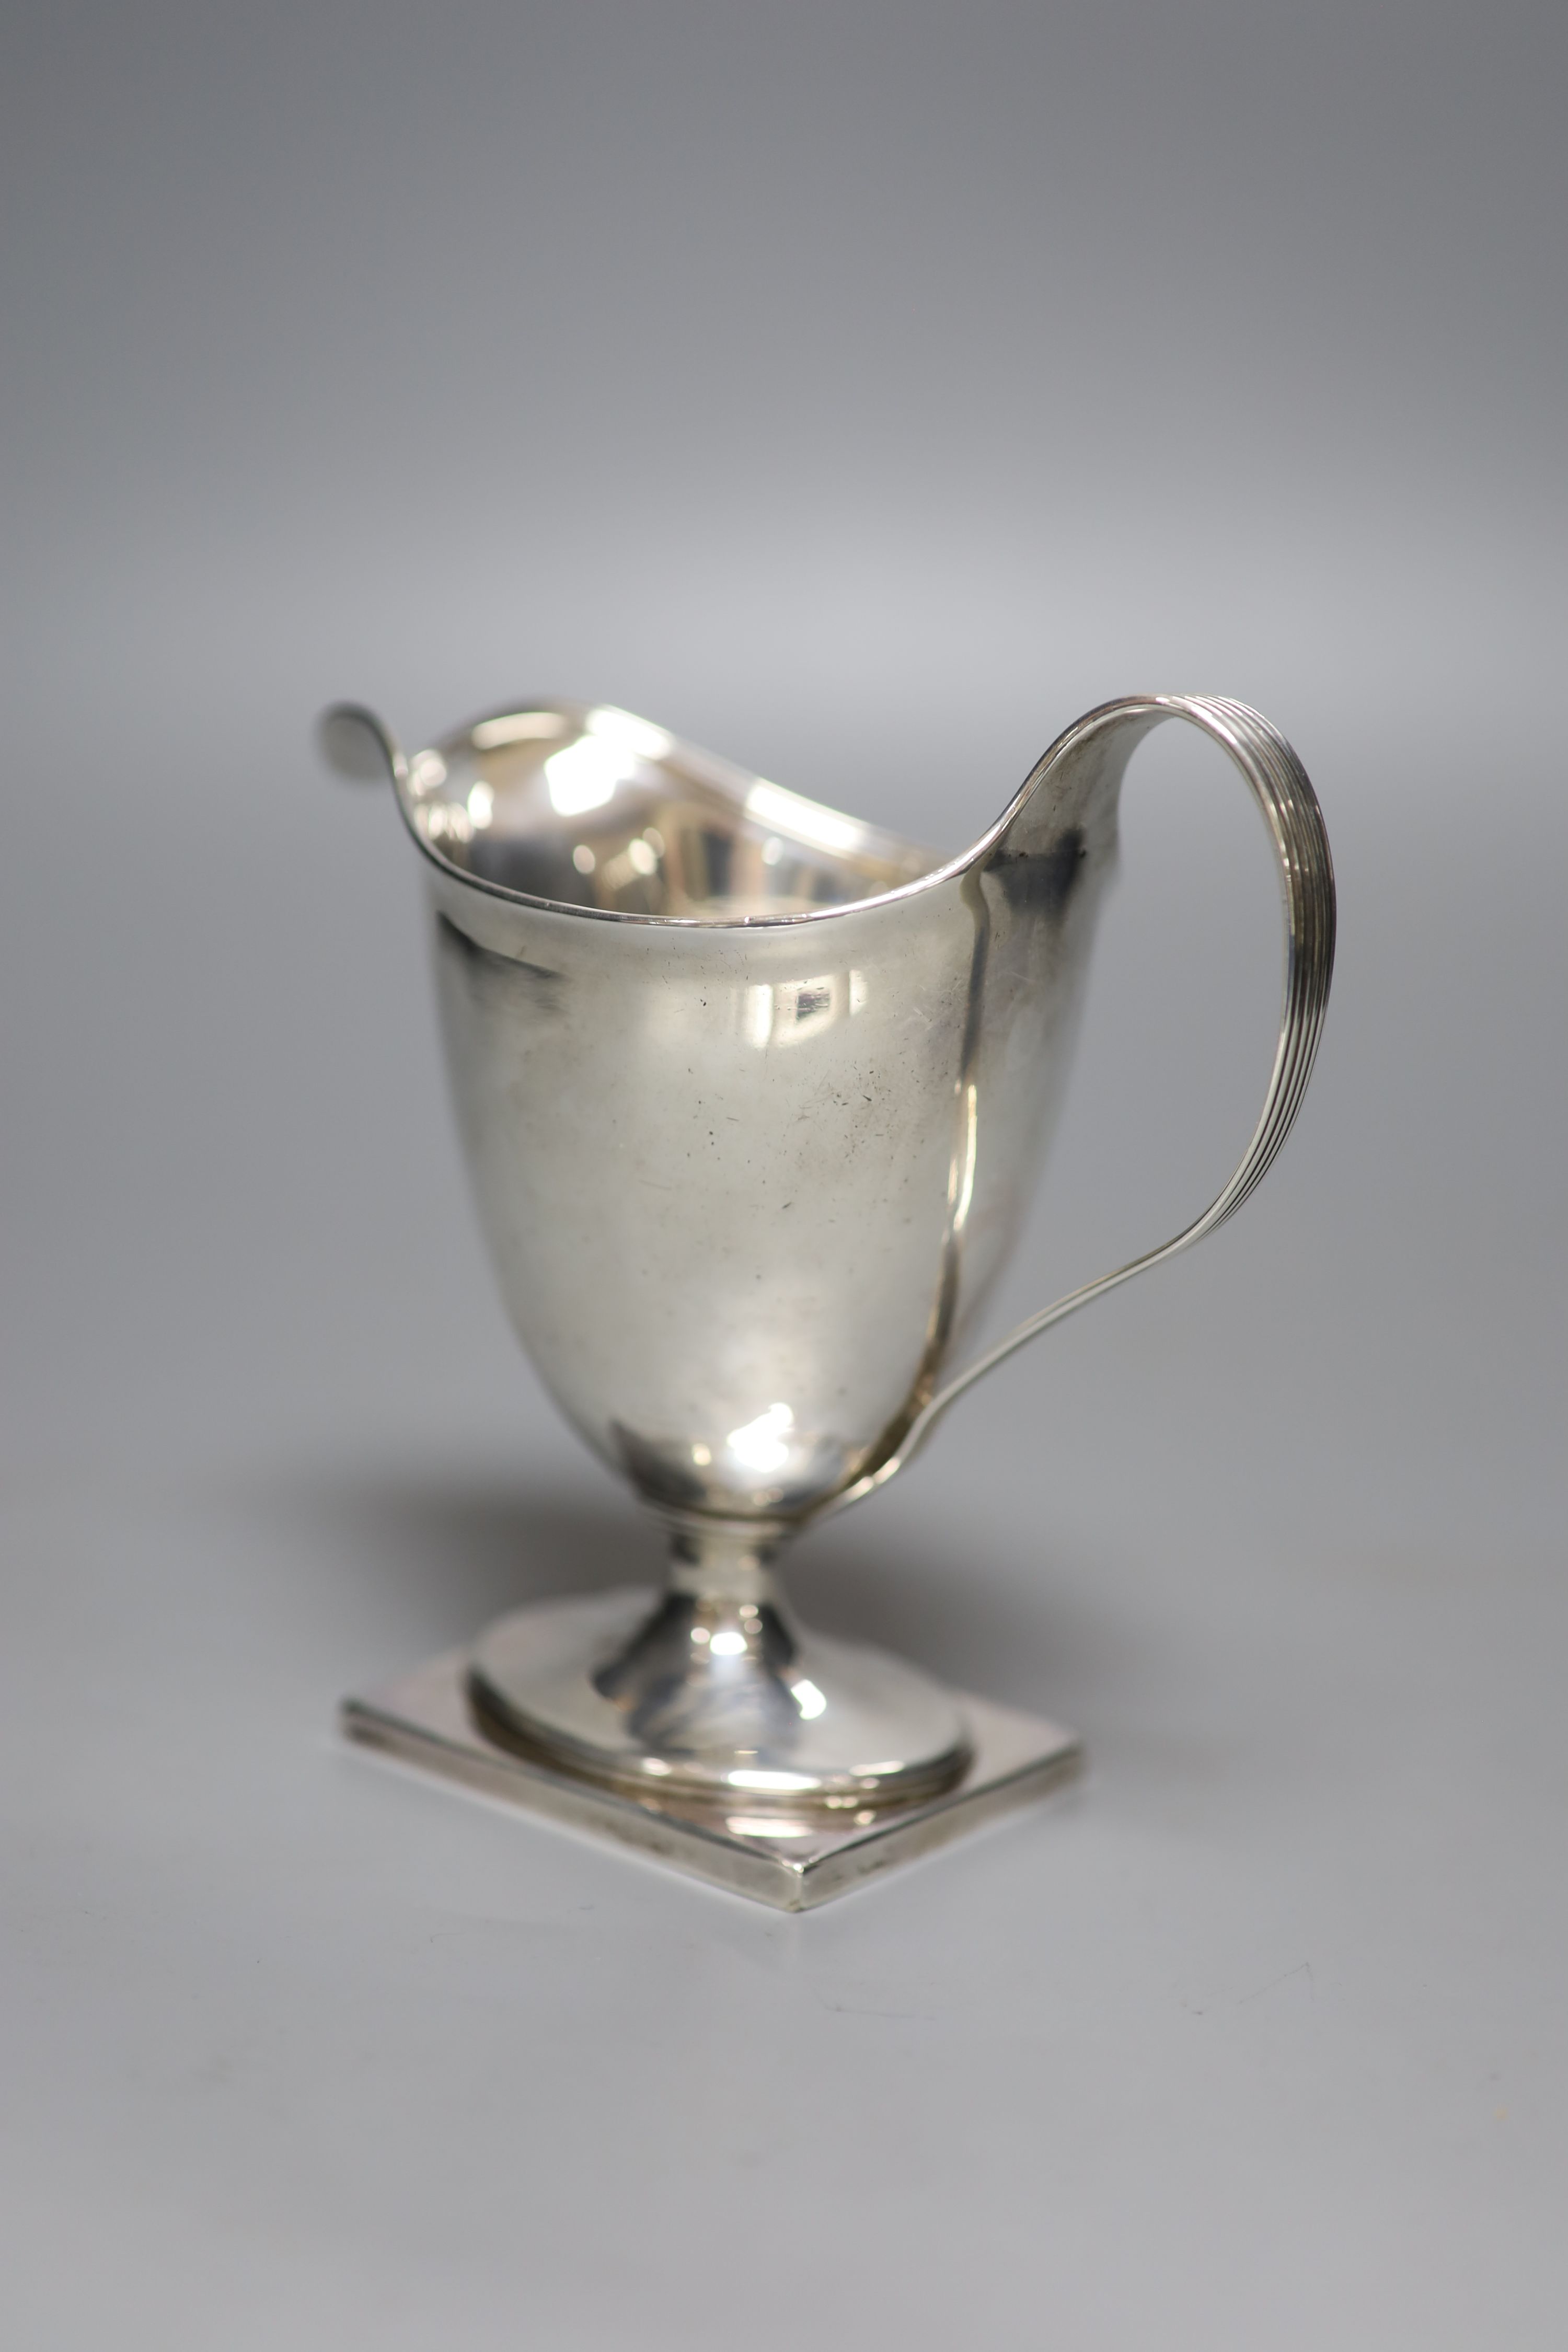 A George III silver helmet shaped pedestal cream jug, Henry Chawner, London, 1795, 13.4cm, 5.5oz